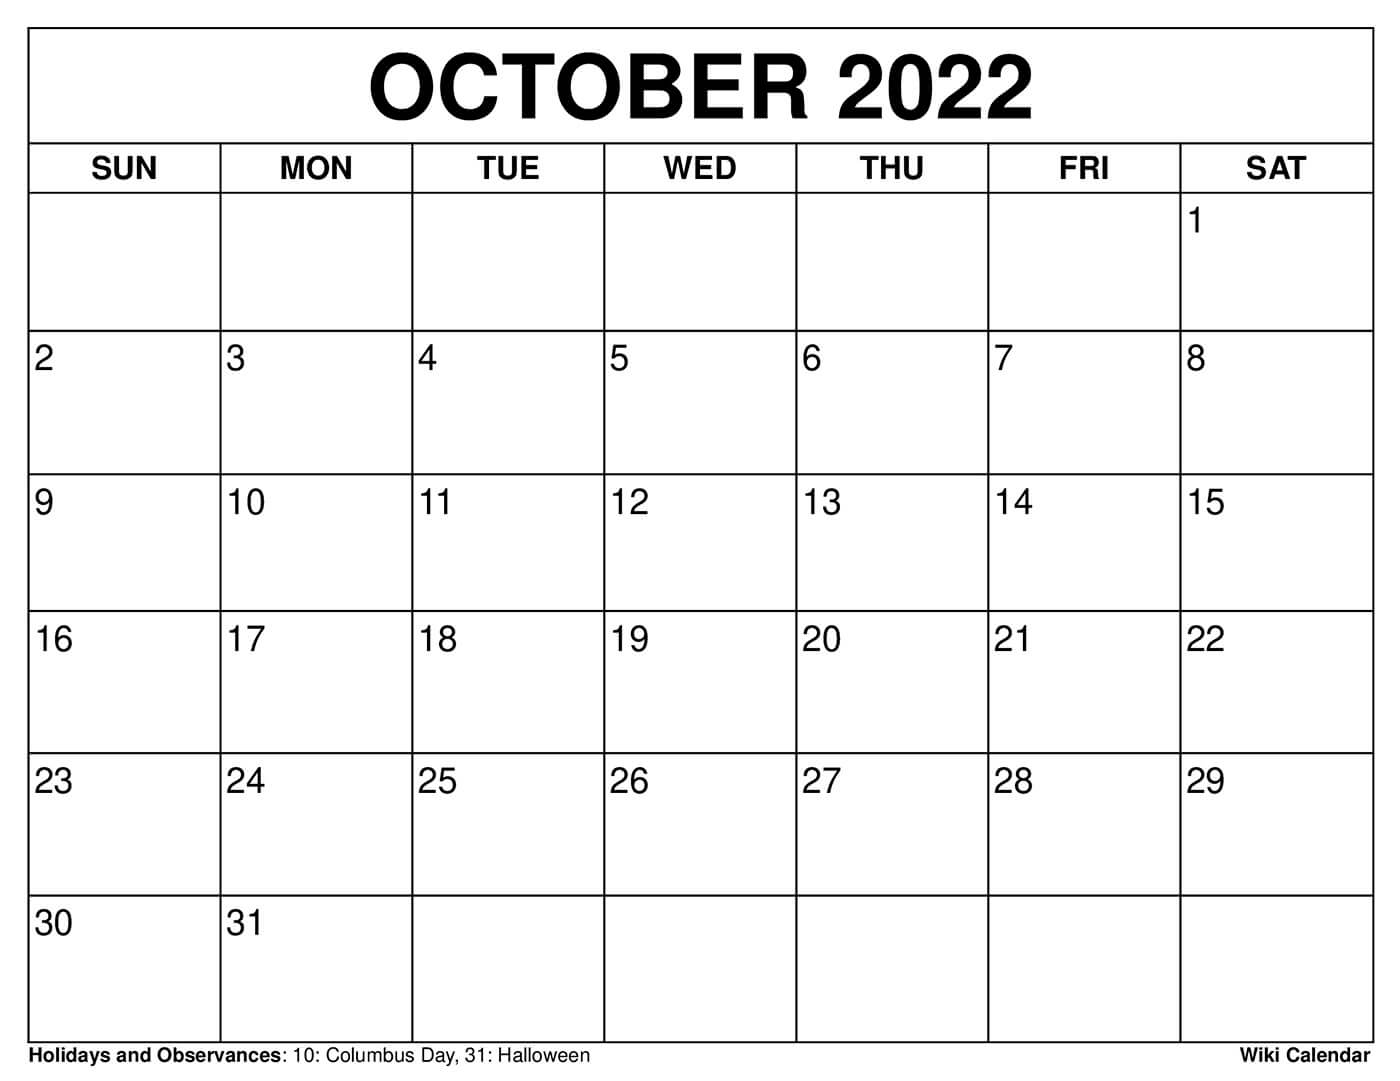 October 2022 Calendar Free Printable Free Printable October 2022 Calendars - Wiki Calendar